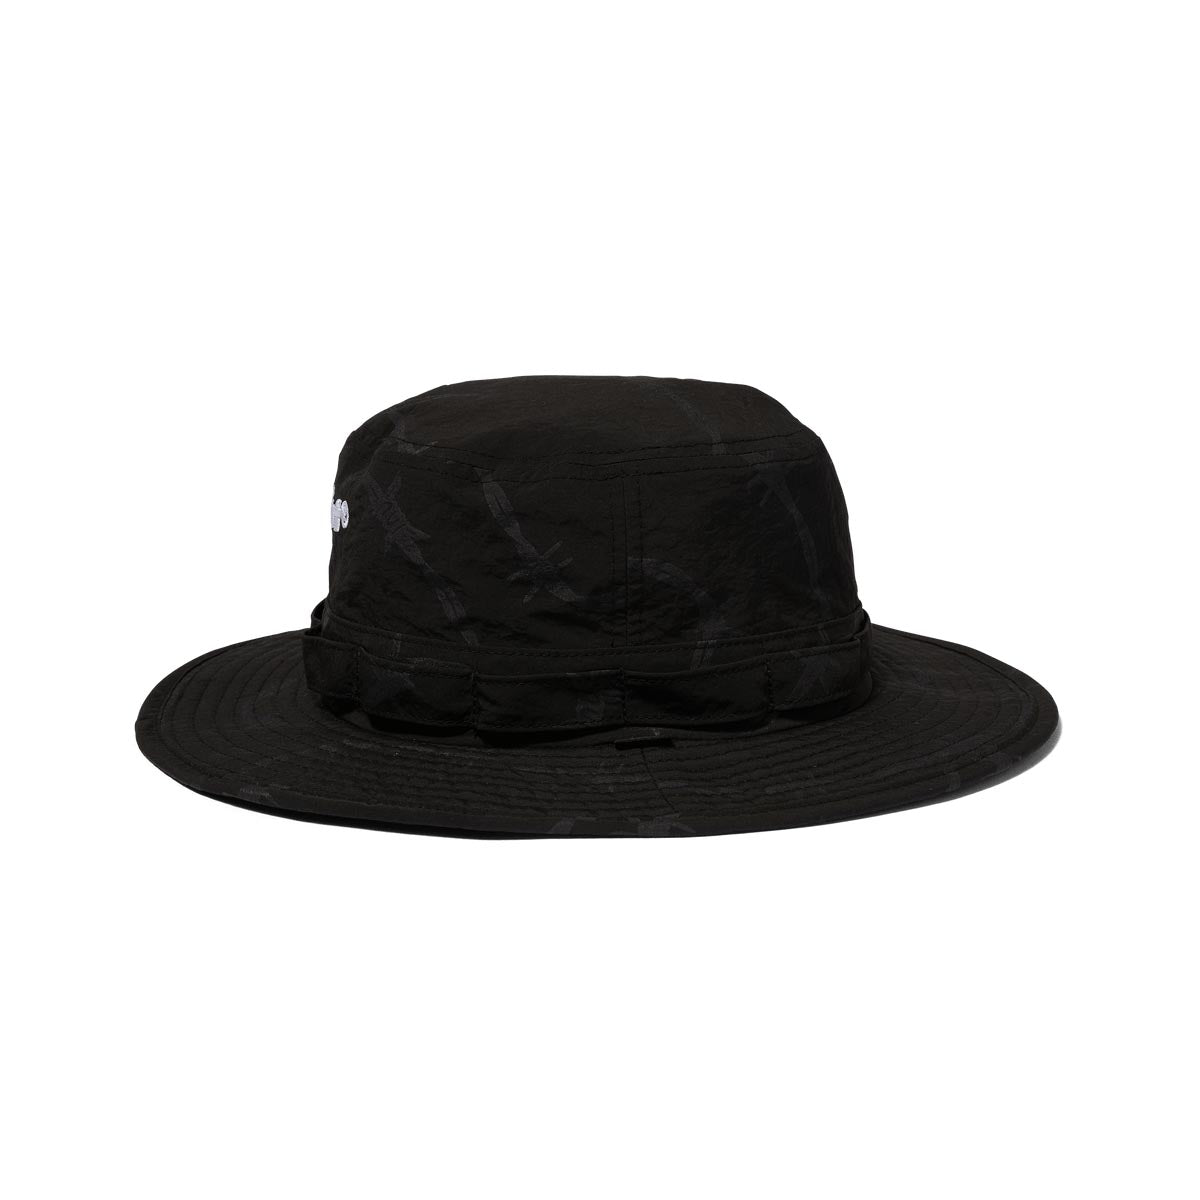 HUF Reservoir Boonie Hat - Black image 2